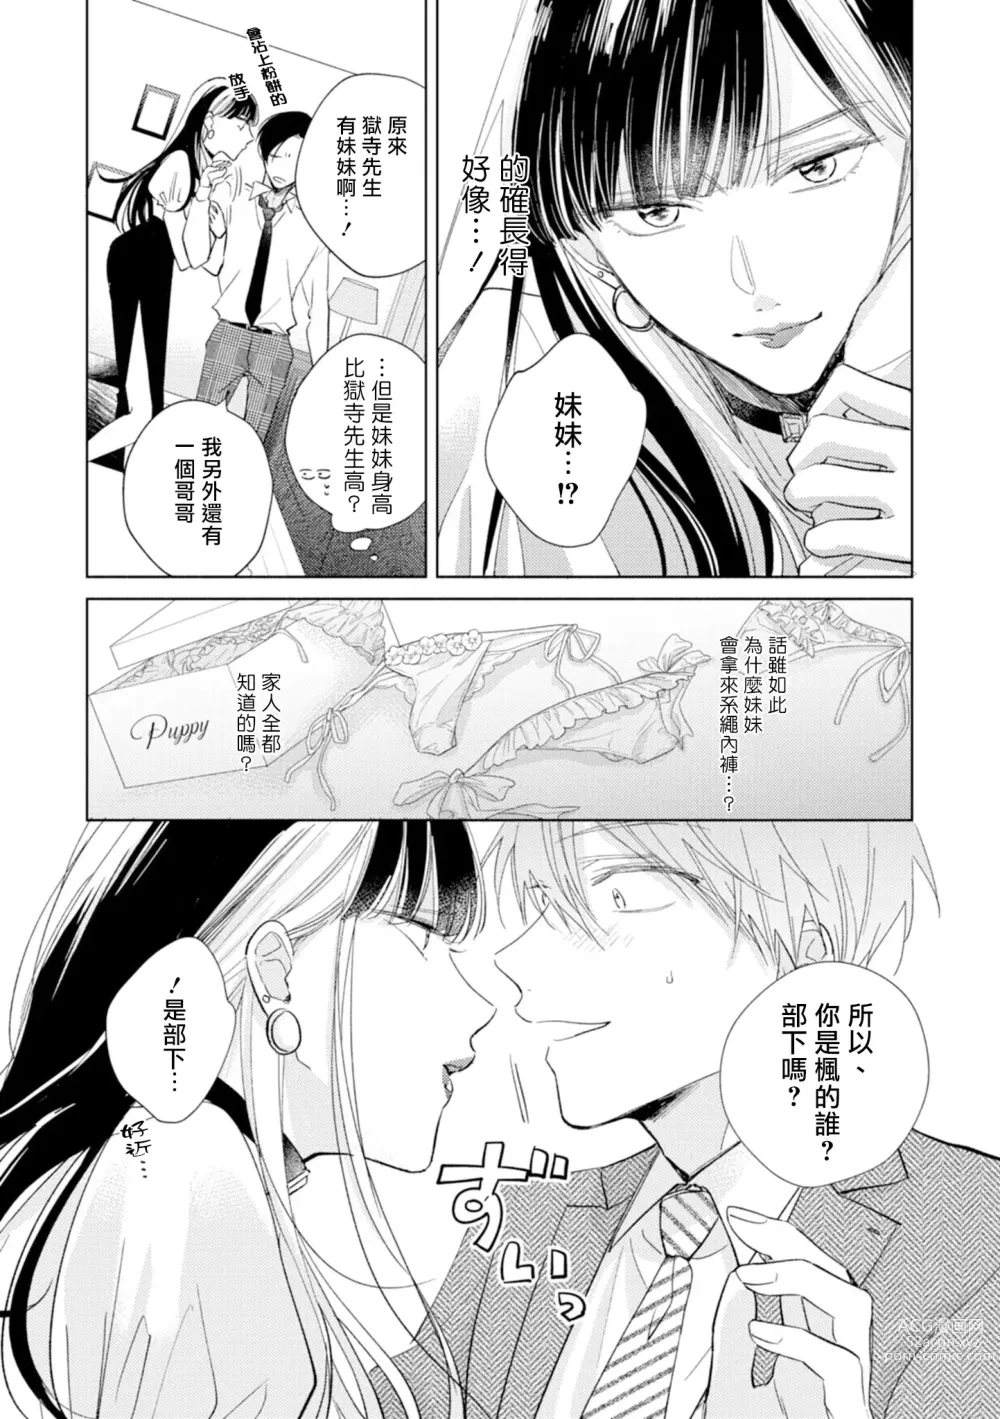 Page 7 of manga 魔鬼上司·狱寺先生想暴露 Ch. 7-12+加笔+13